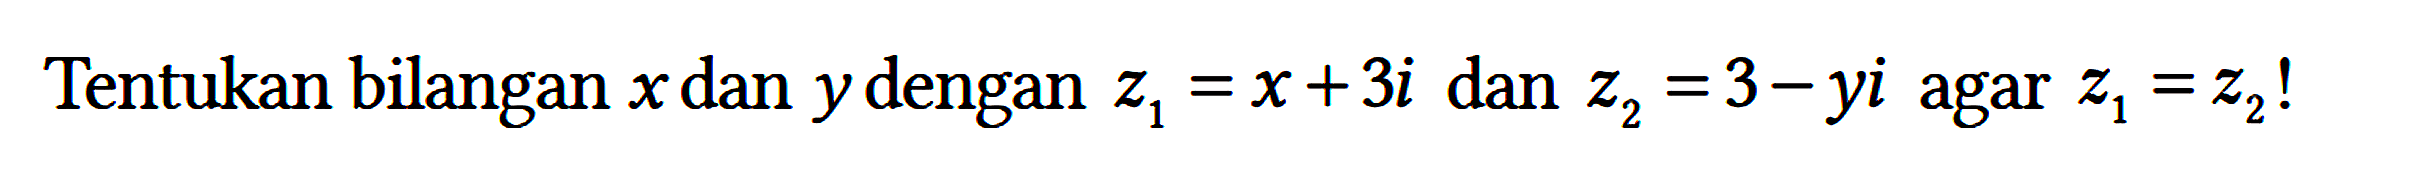 Tentukan bilangan x dan y dengan z1 = x + 3i dan z2 = 3 - yi agar z1 = z2!